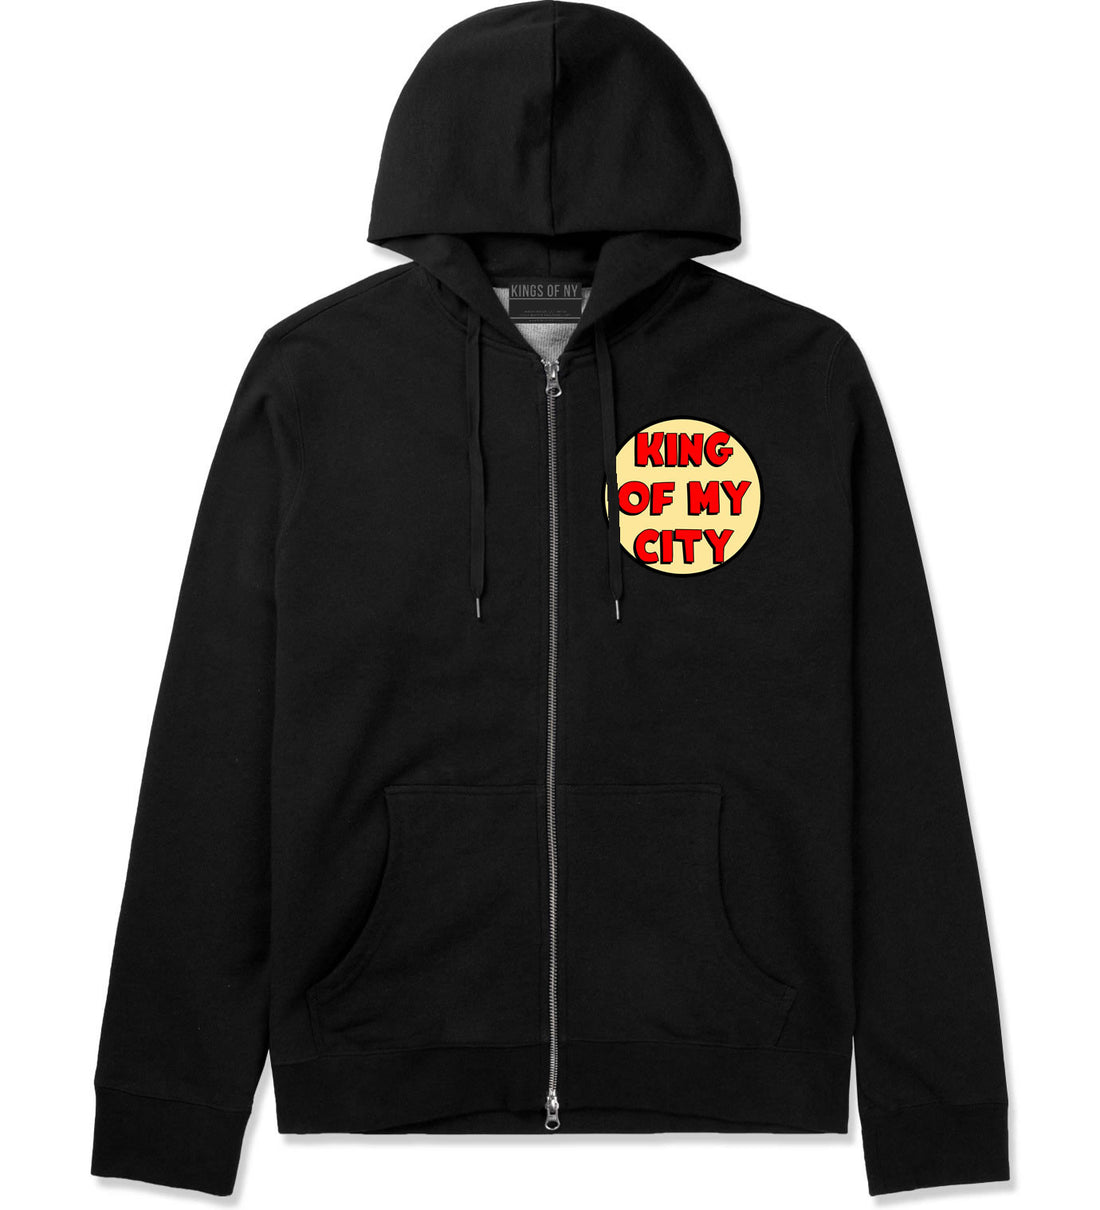 King Of My City Chest Logo Zip Up Hoodie Hoody in Black by Kings Of NY